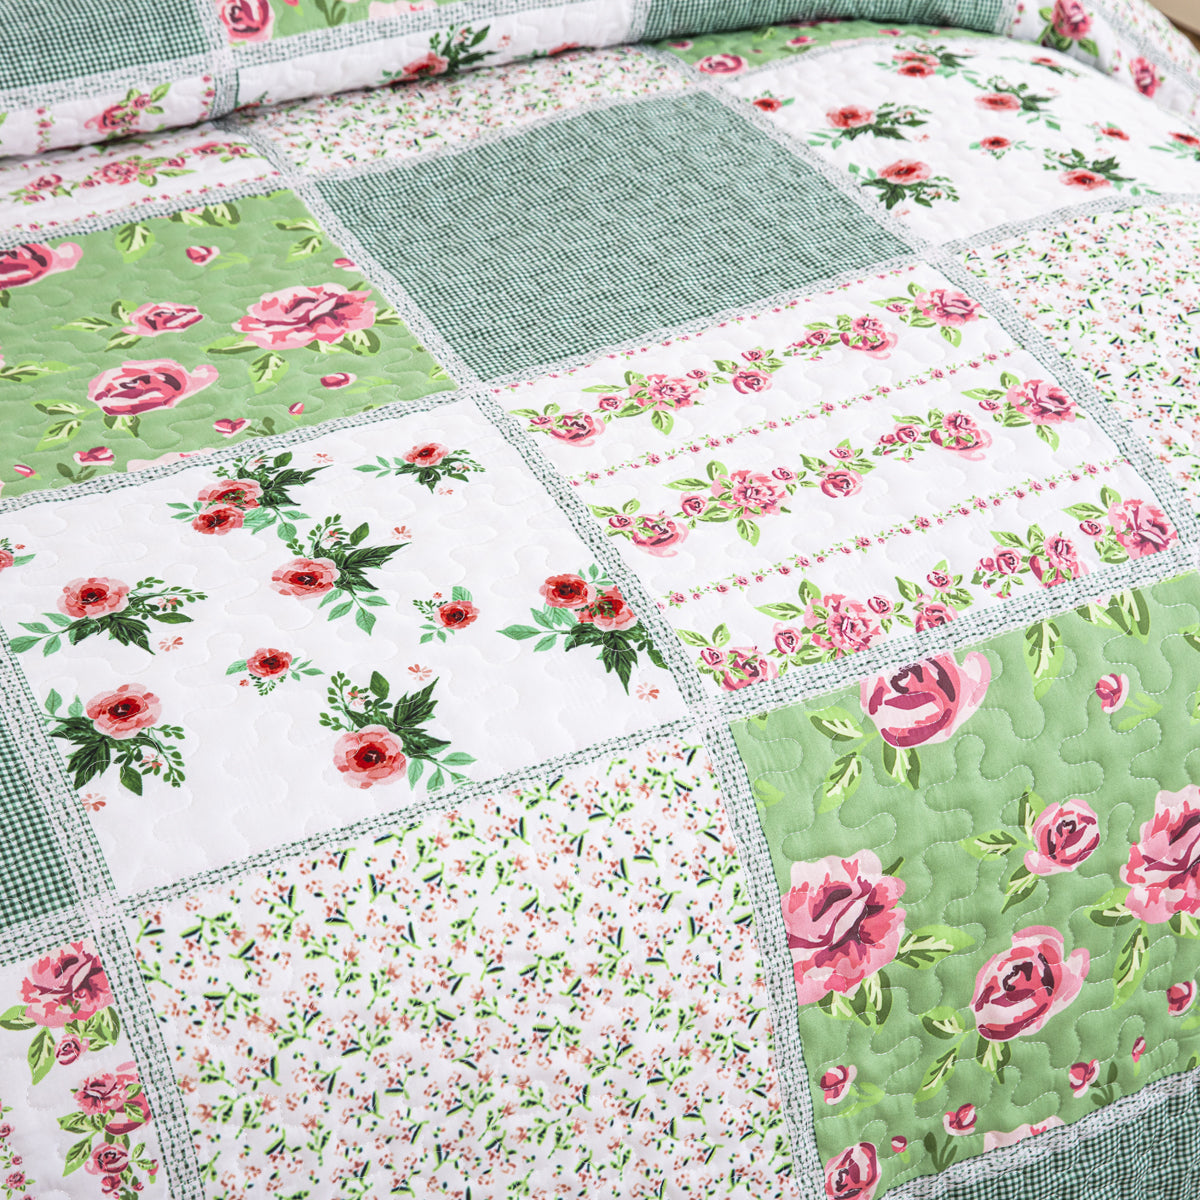 Flower Art Design 3 Pieces Quilt Set with 2 Pillowcases